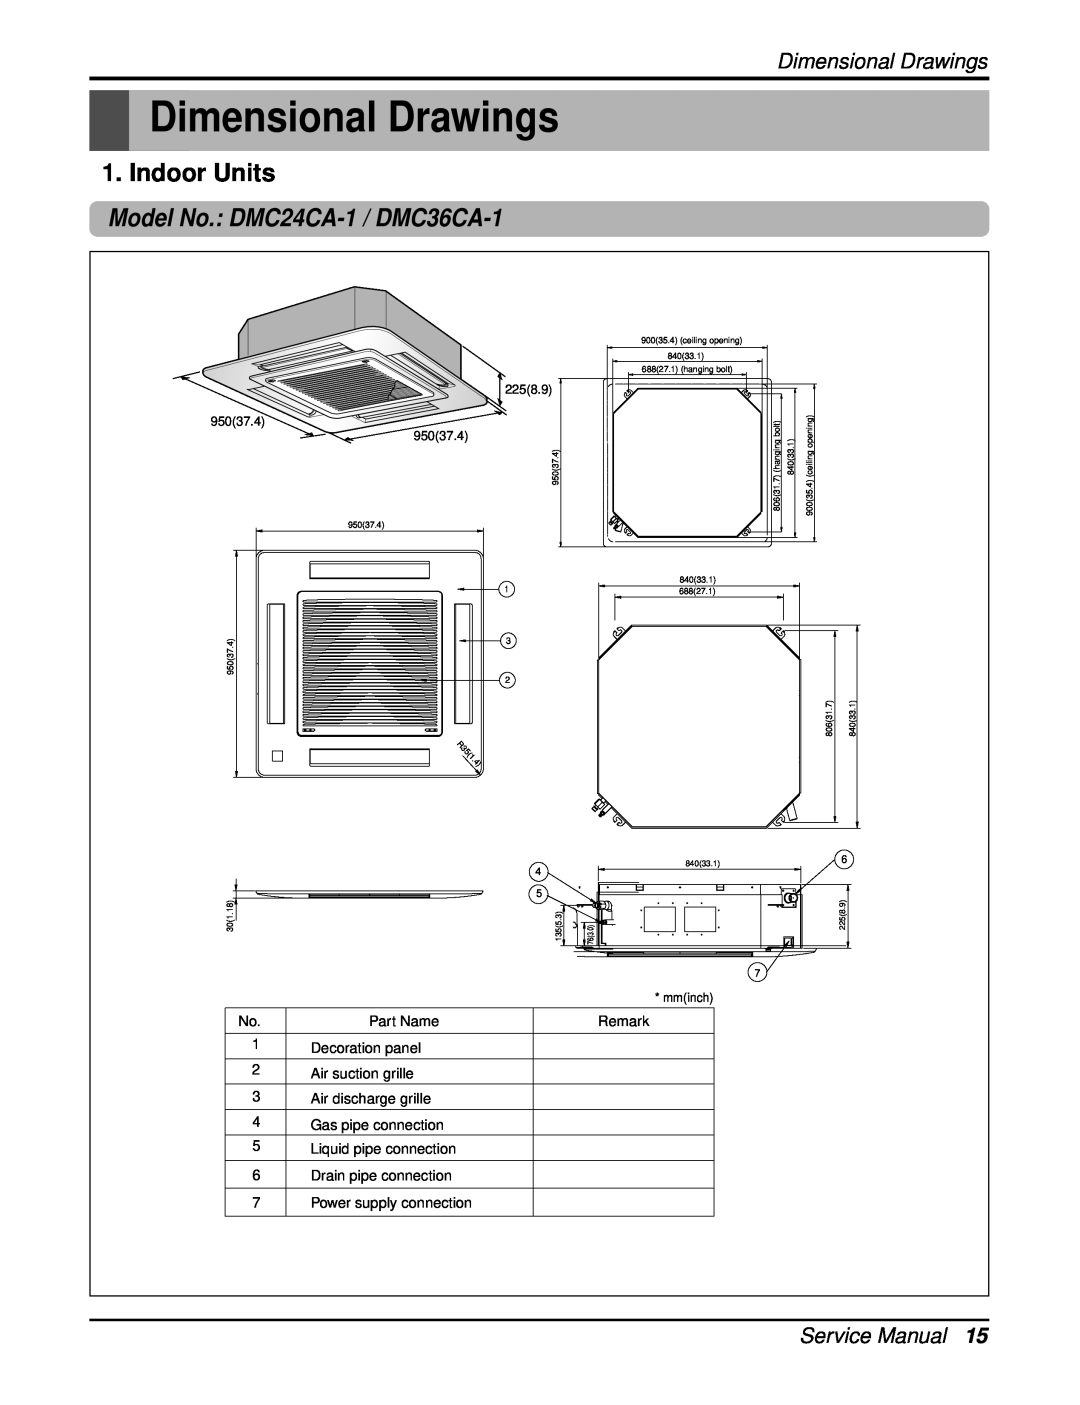 Heat Controller manual Dimensional Drawings, Indoor Units, Model No. DMC24CA-1 / DMC36CA-1 